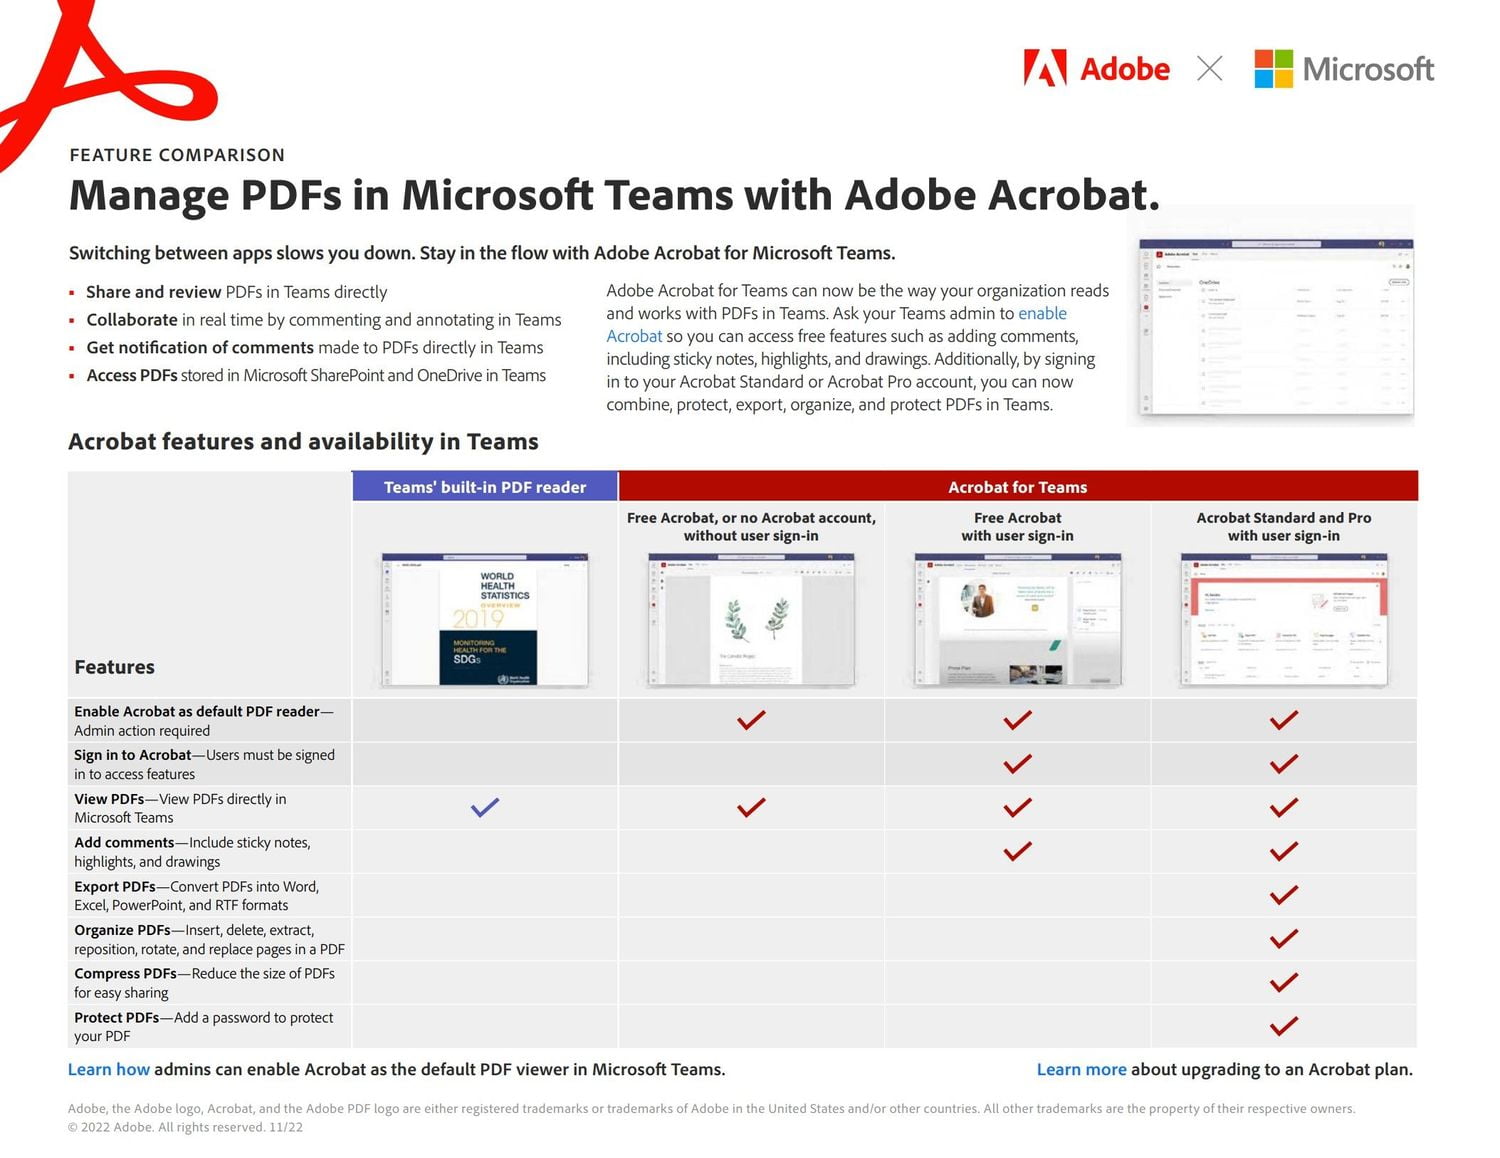 Adobe Acrobat in Teams subscription comparison chart